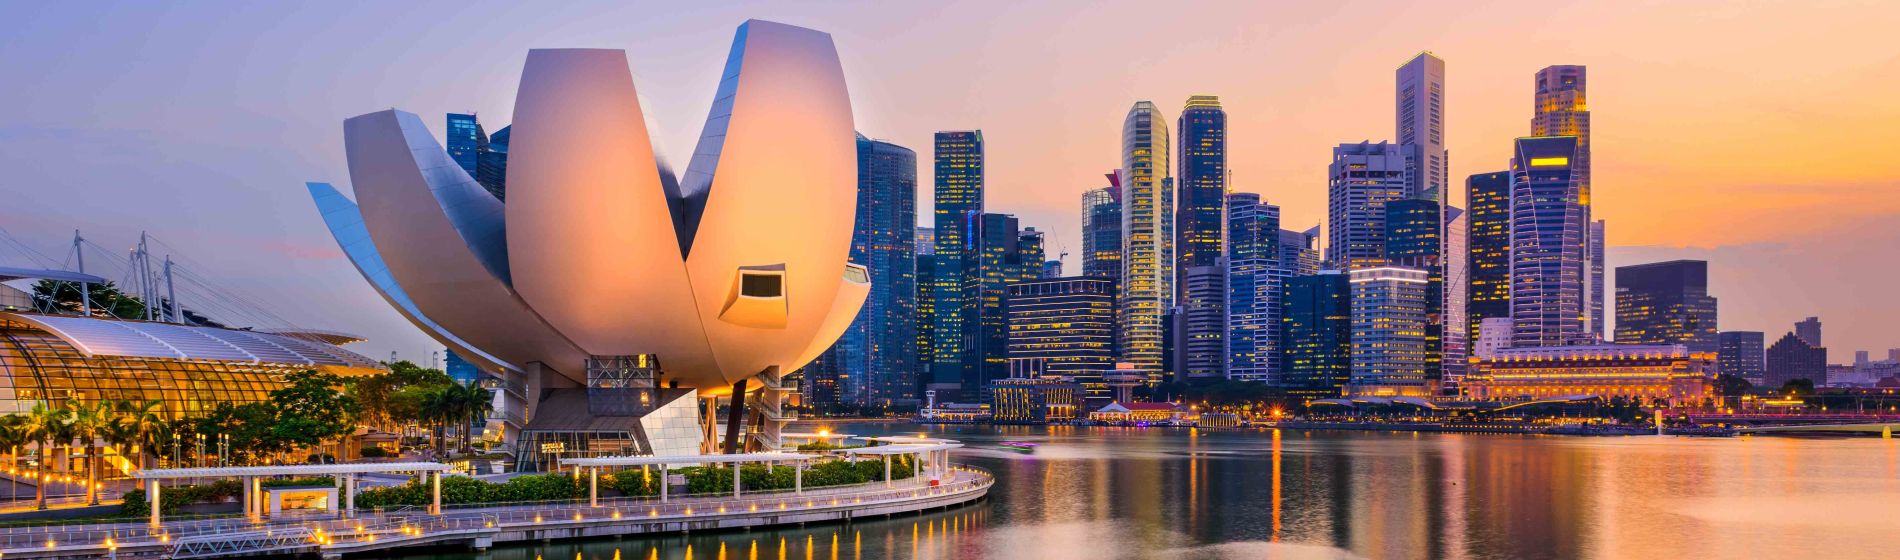 singapore_skyline_am_marina_waehrend_der_daemmerung.jpg